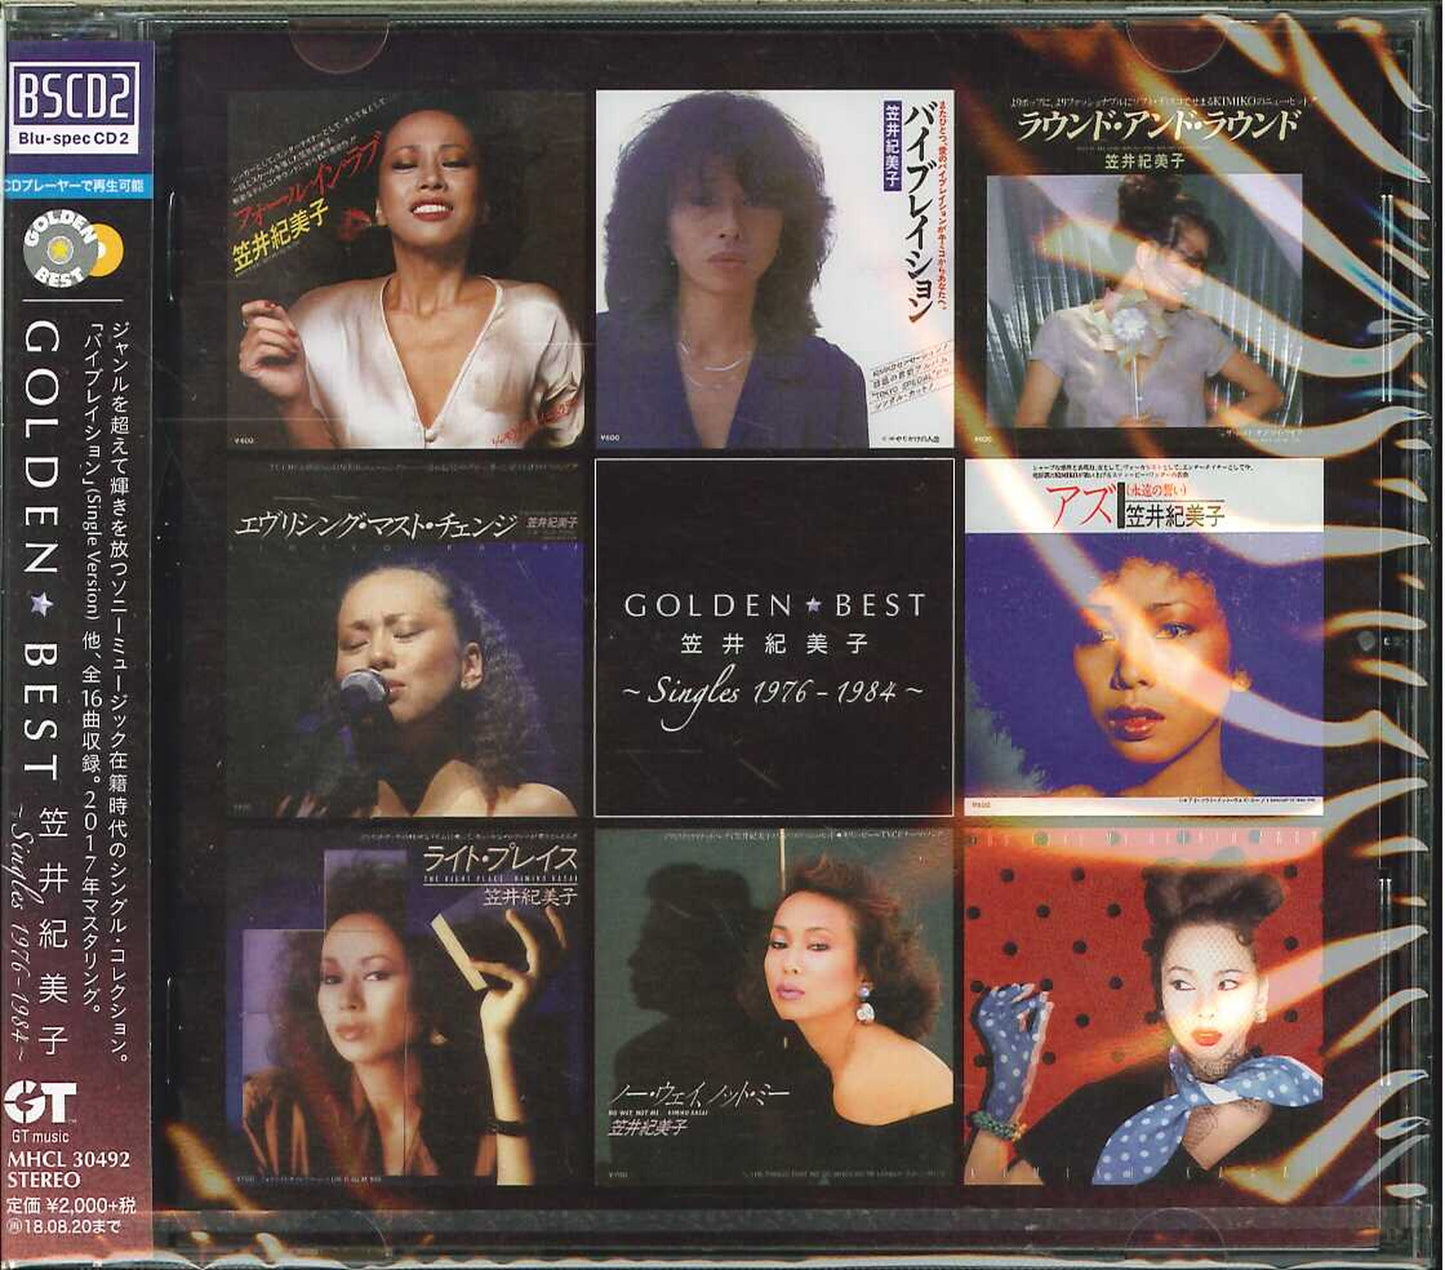 Kimiko Kasai - Golden Best Kasai Kimiko-Singles 1976-1984- - Japan  Blu-spec CD2